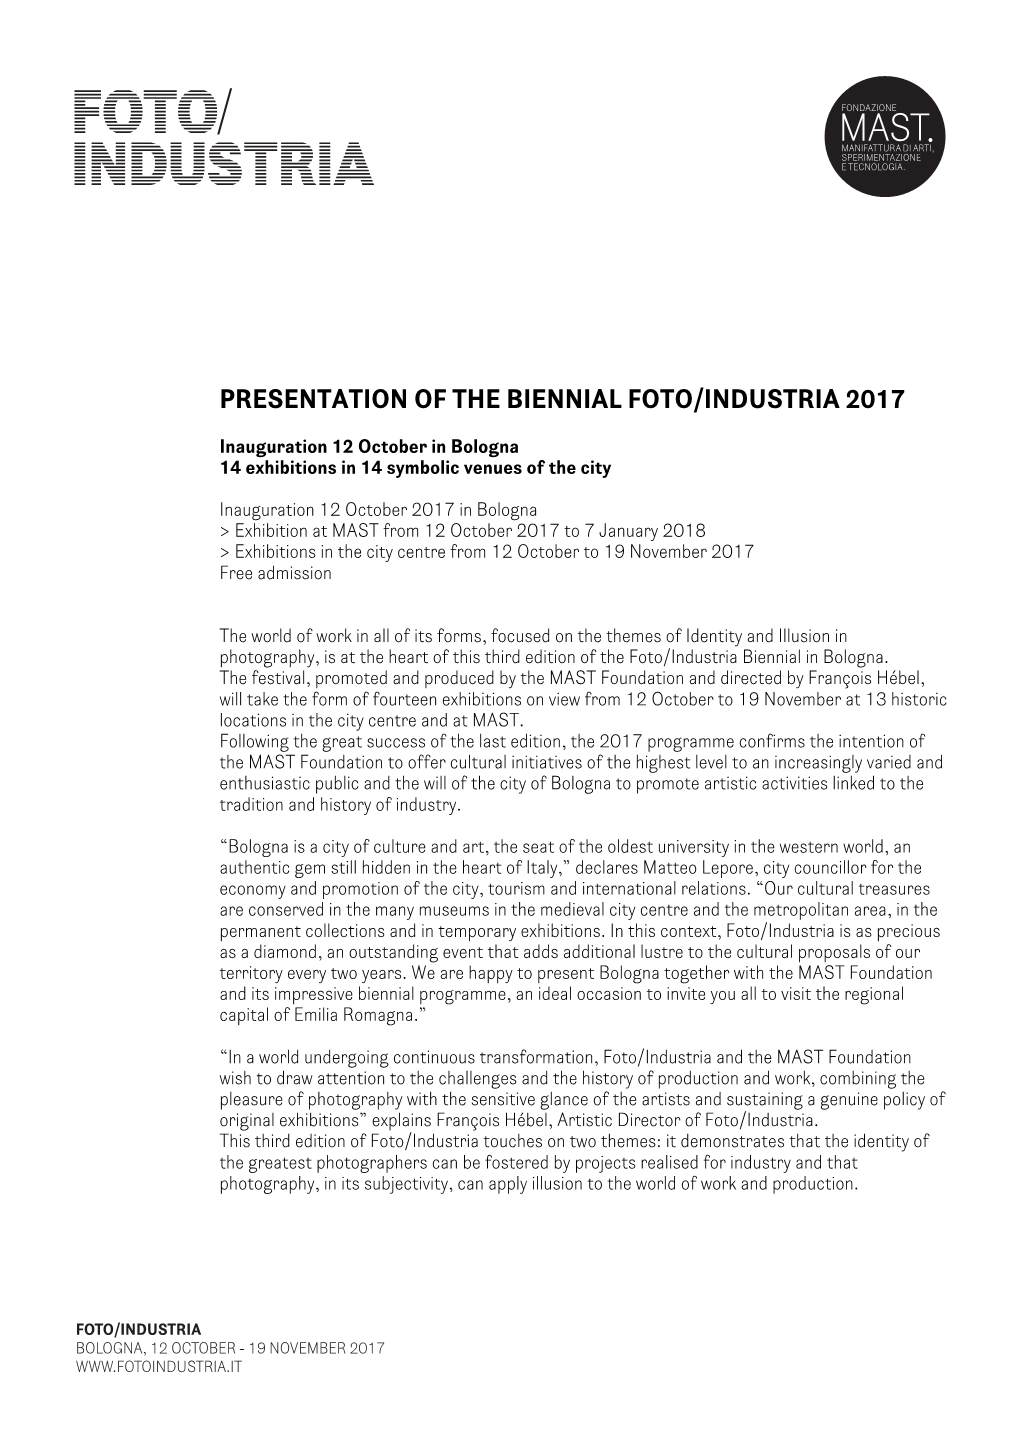 Presentation of the Biennial Foto/Industria 2017